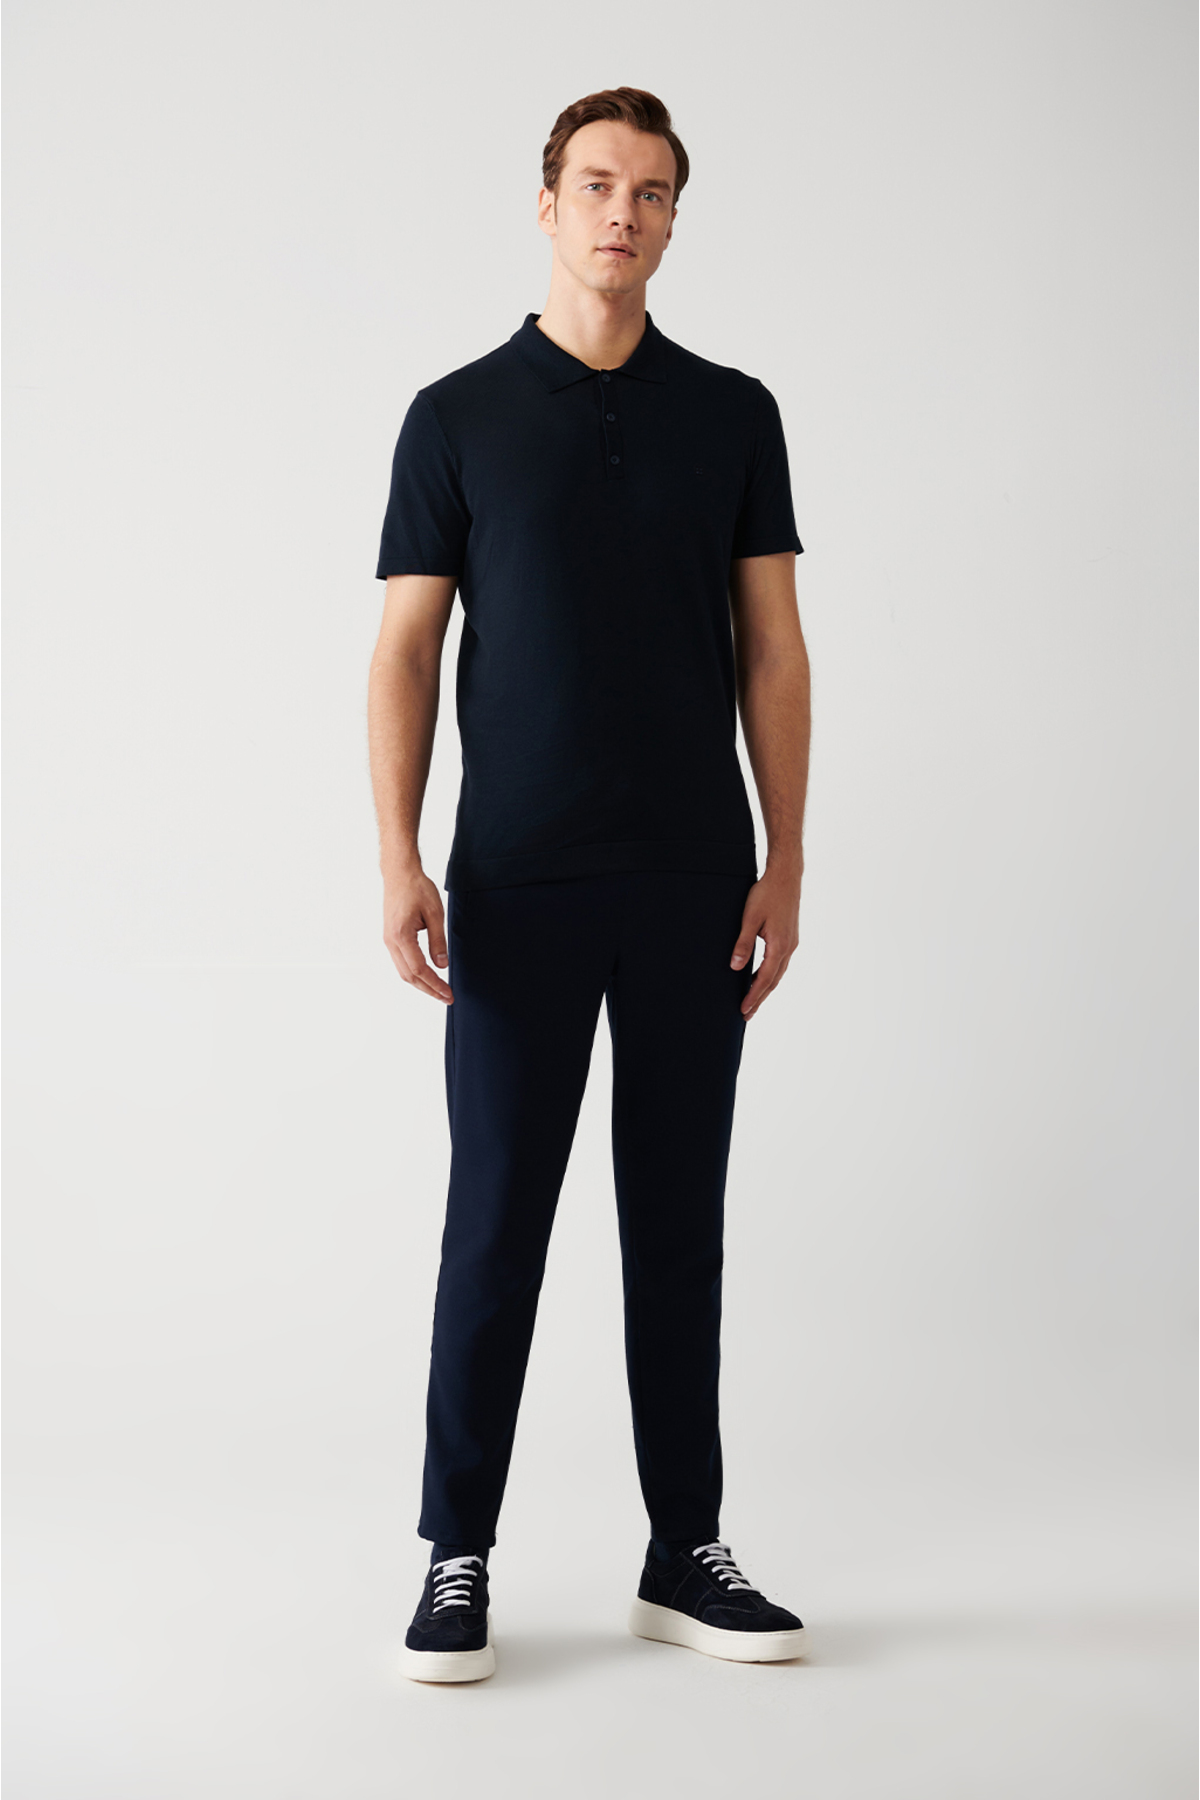 Avva تی شرت بافتنی مردانه یقه پولو نخی آبی سرمه ای استاندارد متناسب با برش معمولی E005012